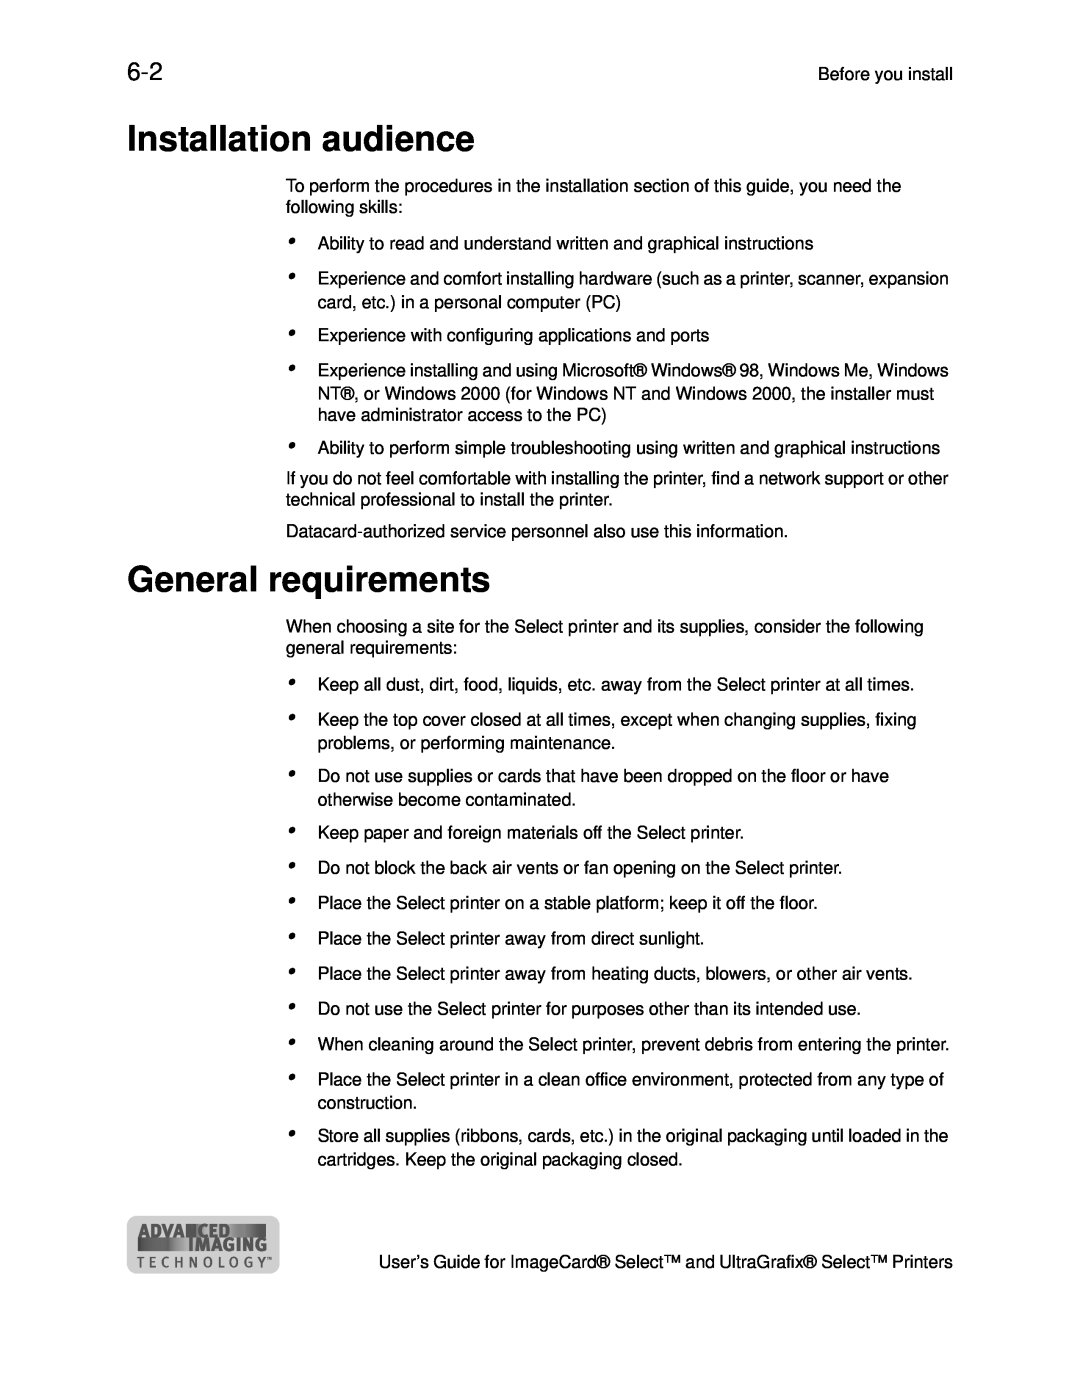 Datacard Group ImageCard SelectTM and UltraGrafix SelectTM Printers manual Installation audience, General requirements 